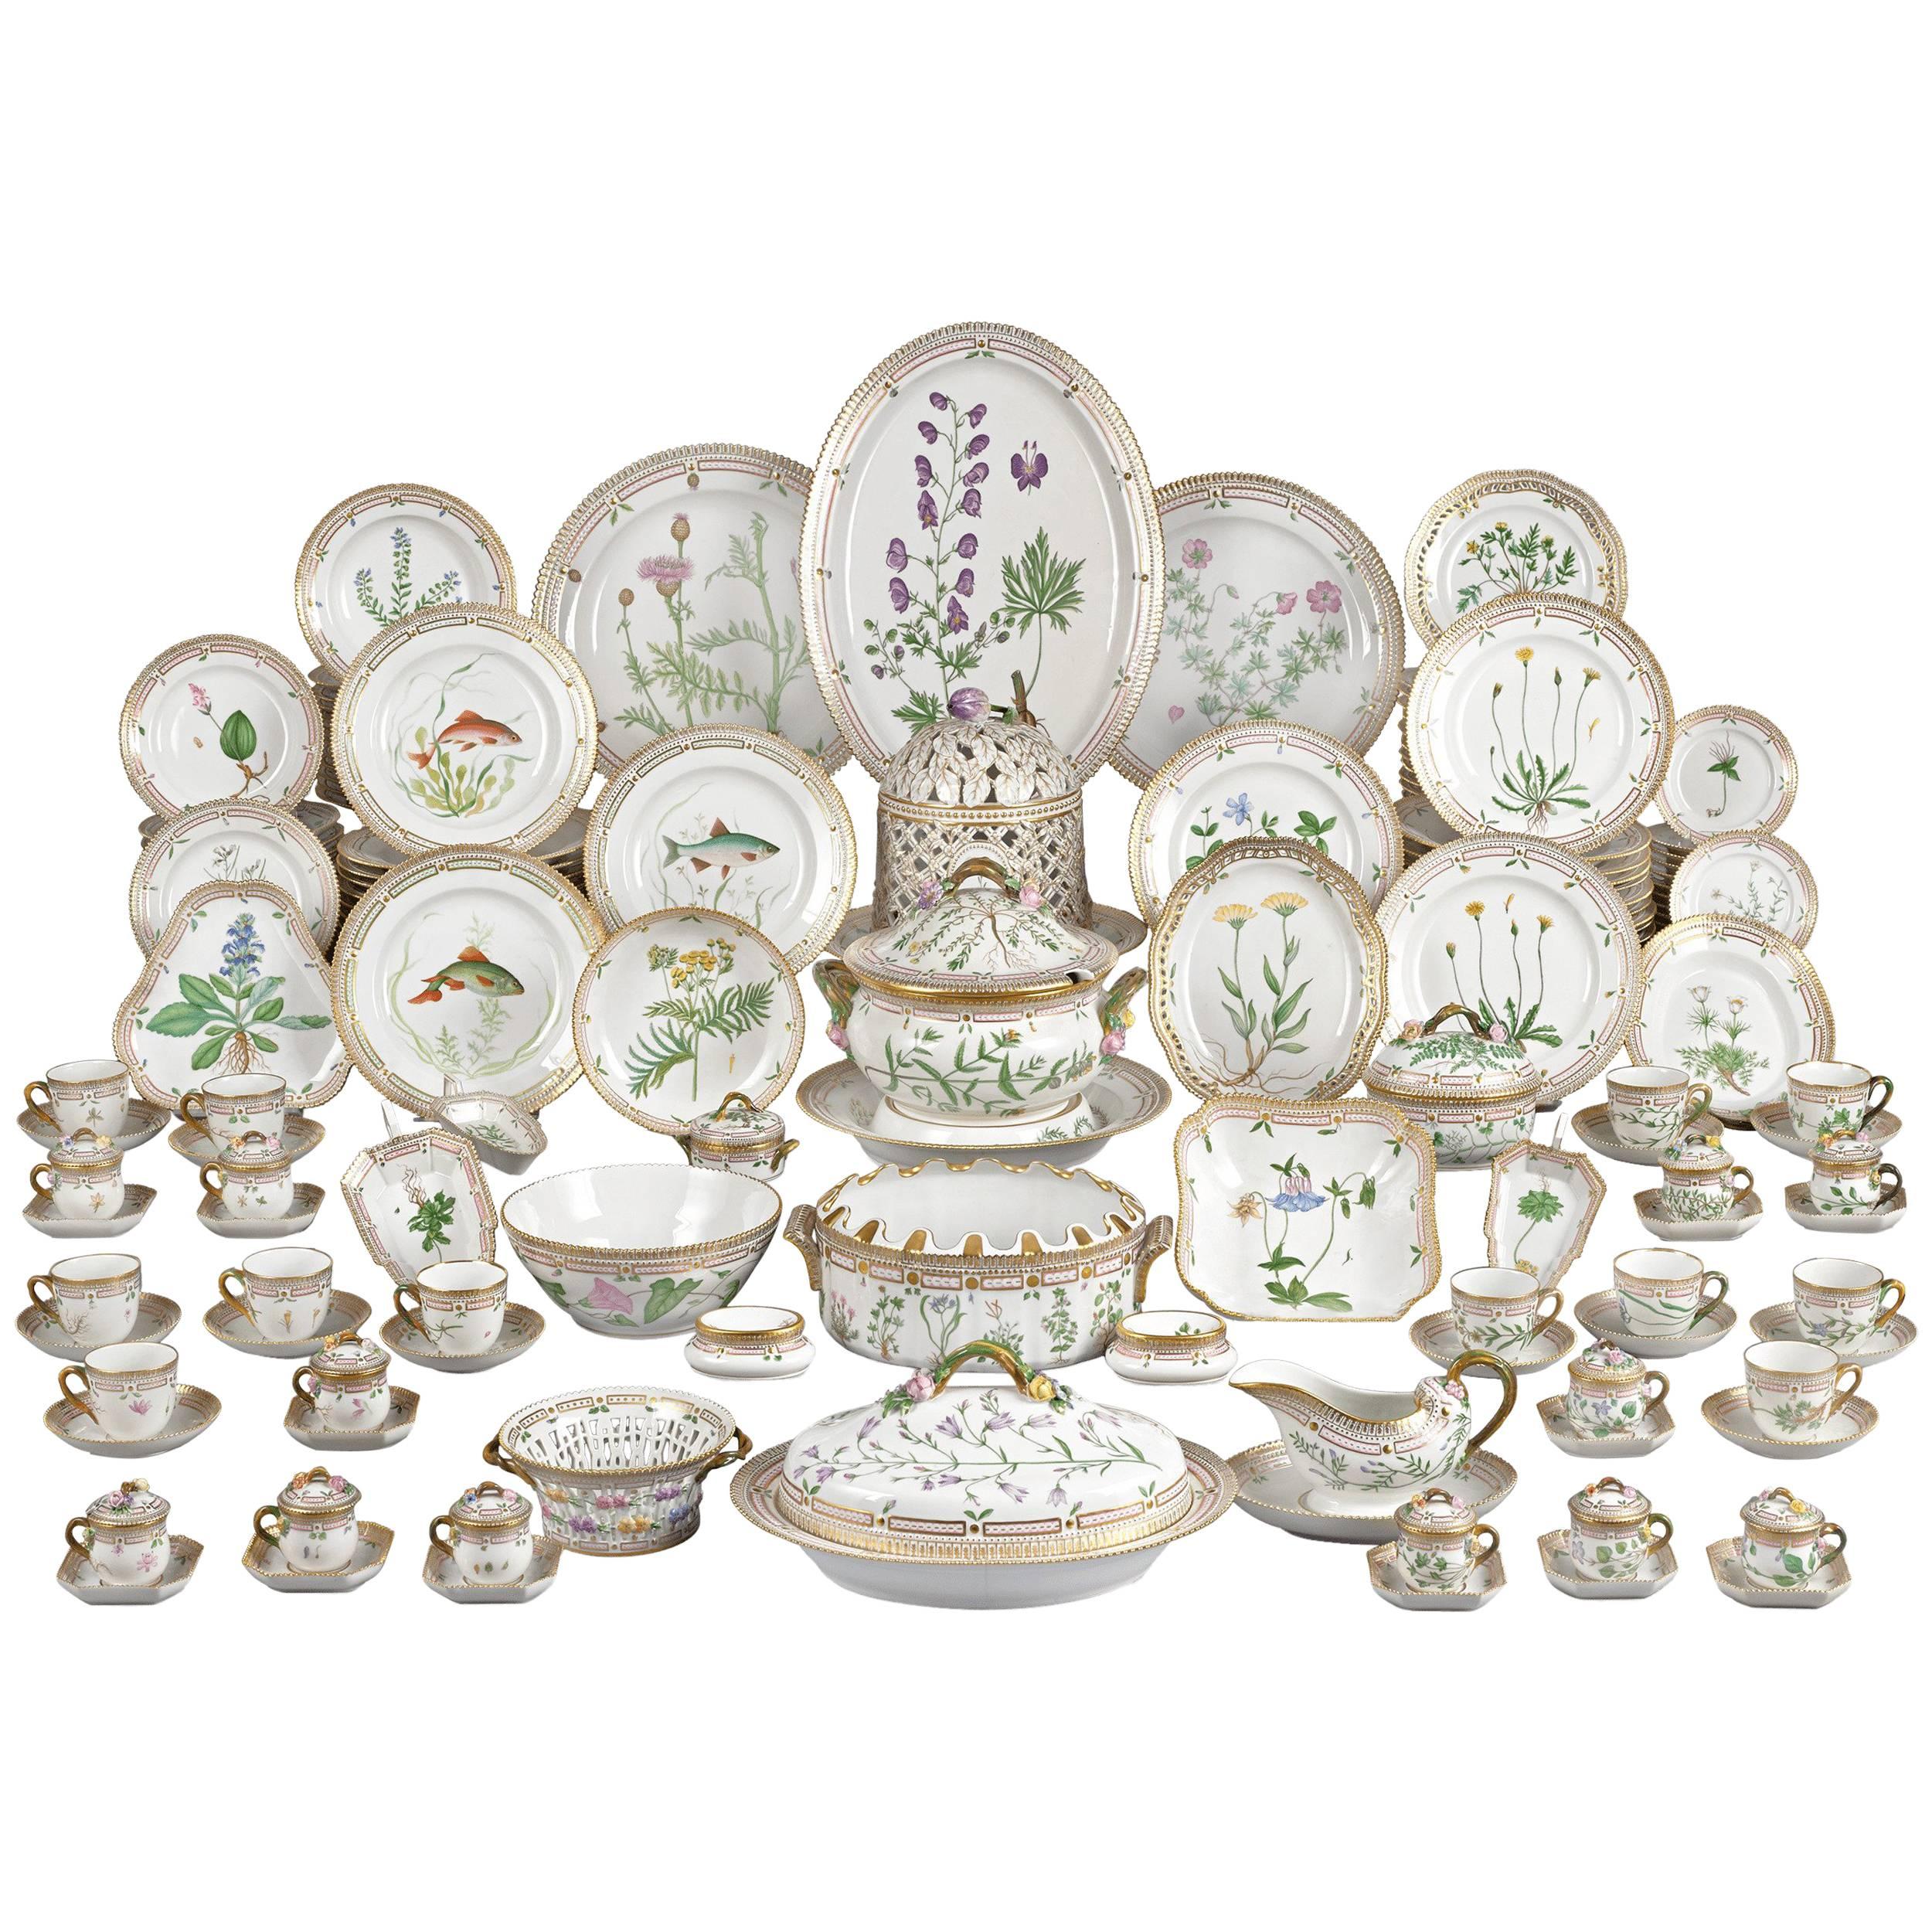 143 Piece Flora Danica Porcelain Dinner Service by Royal Copenhag